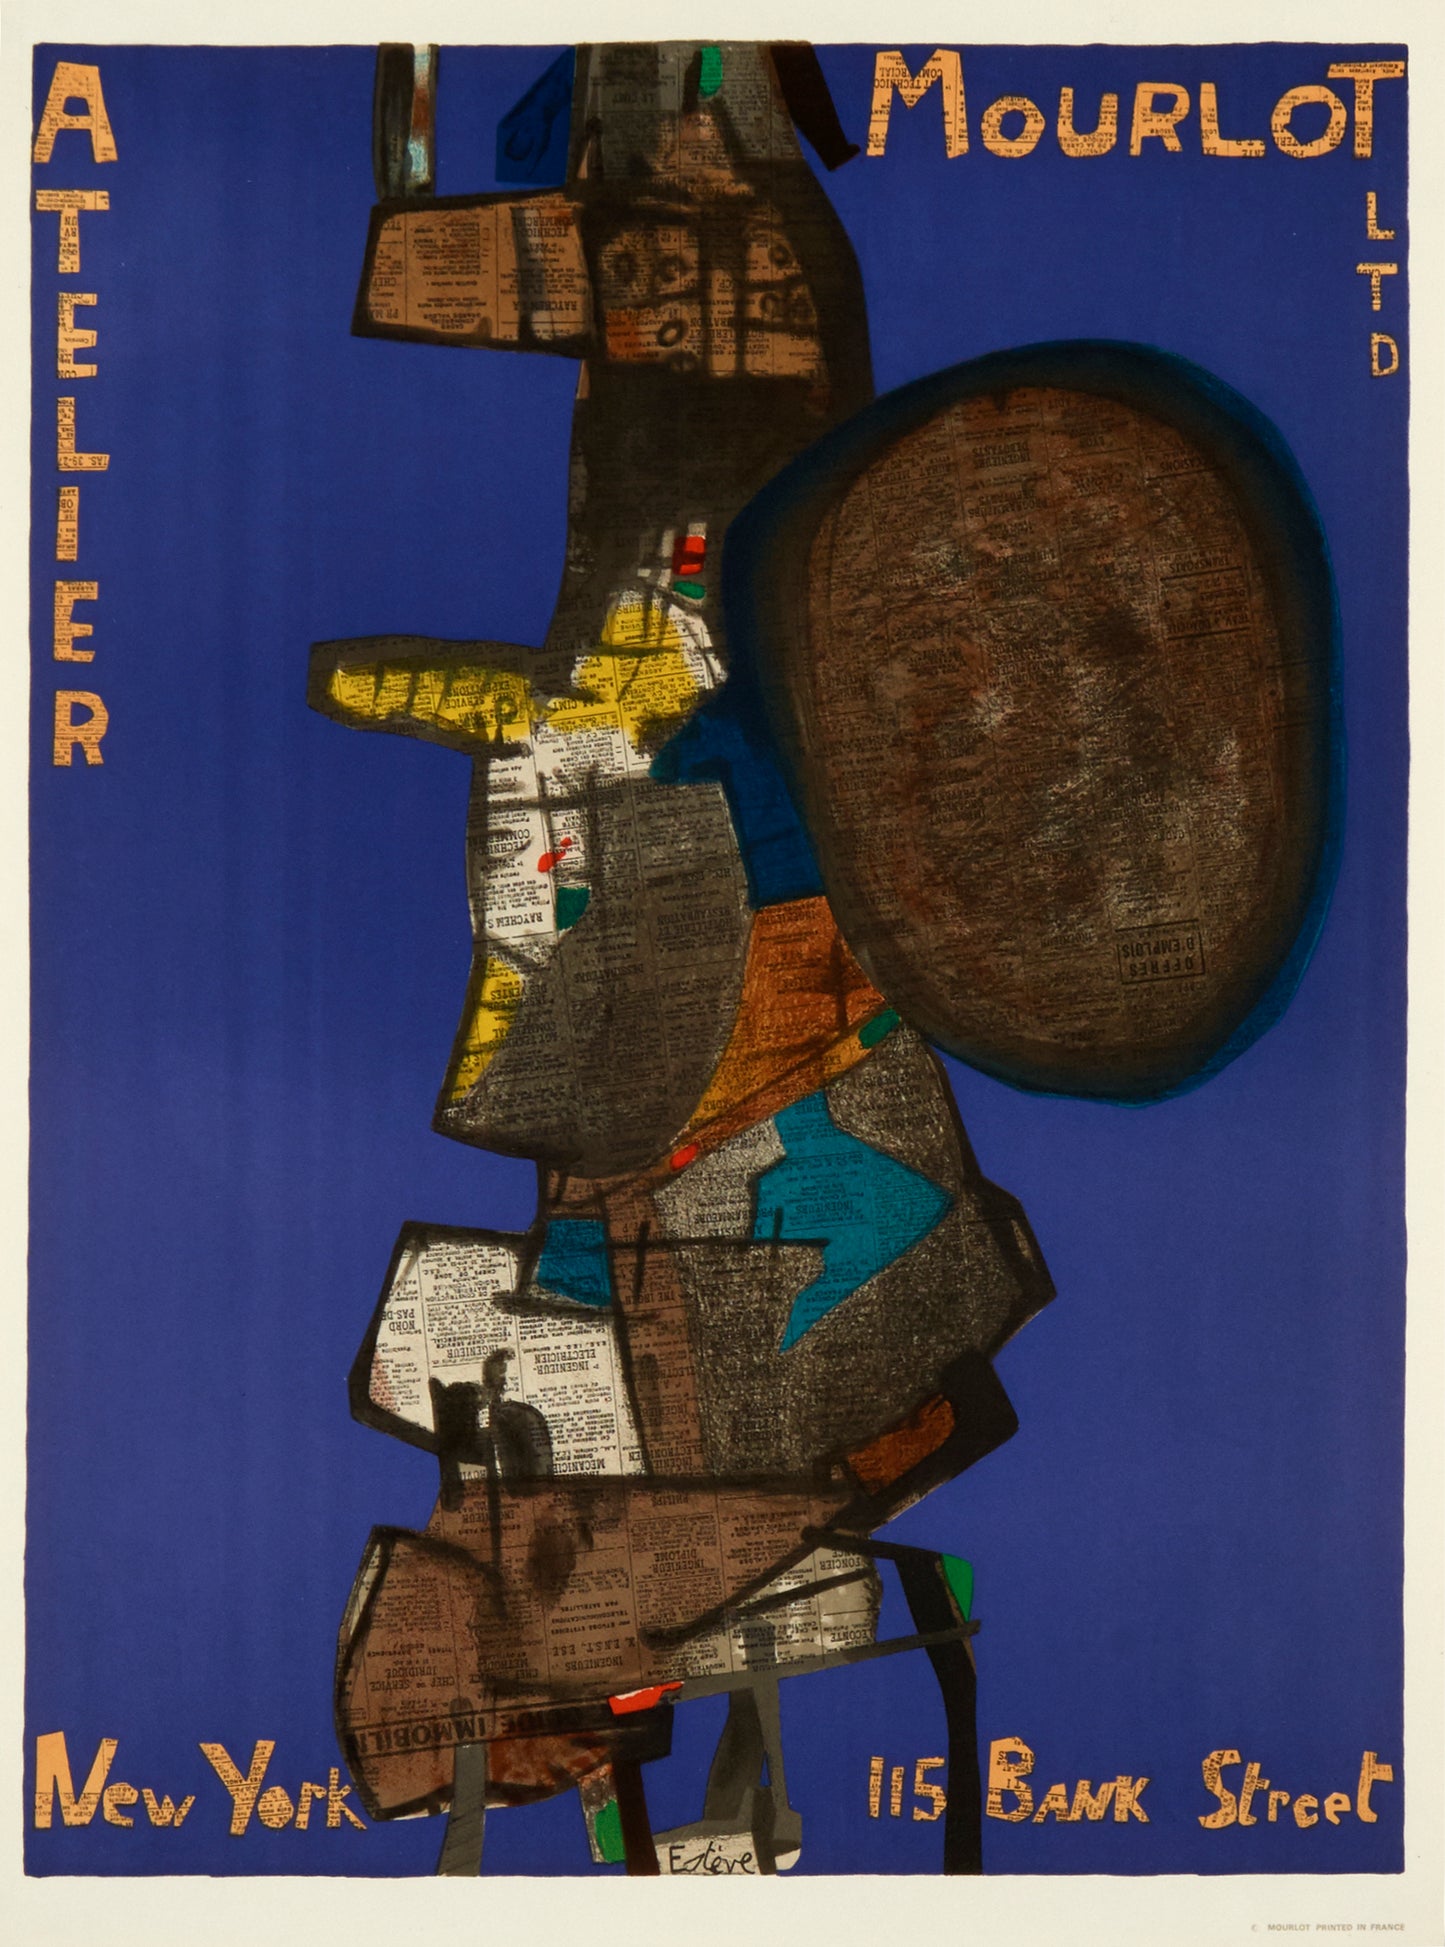 Atelier Mourlot - New York by Maurice Estève, 1967 - Mourlot Editions - Fine_Art - Poster - Lithograph - Wall Art - Vintage - Prints - Original